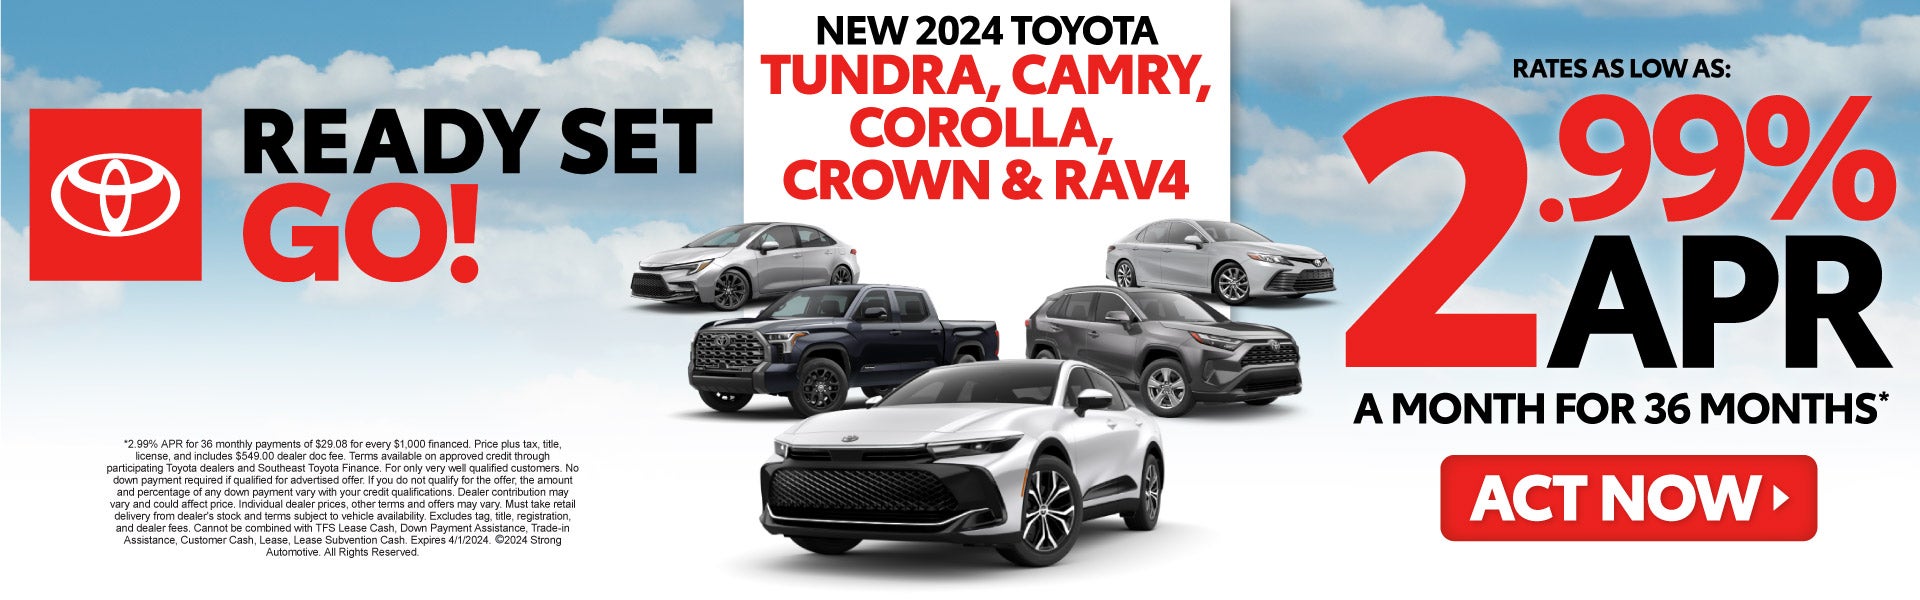 New 2024 Toyota Tundra, Camry, Corolla, Crown & Rav4-Act Now